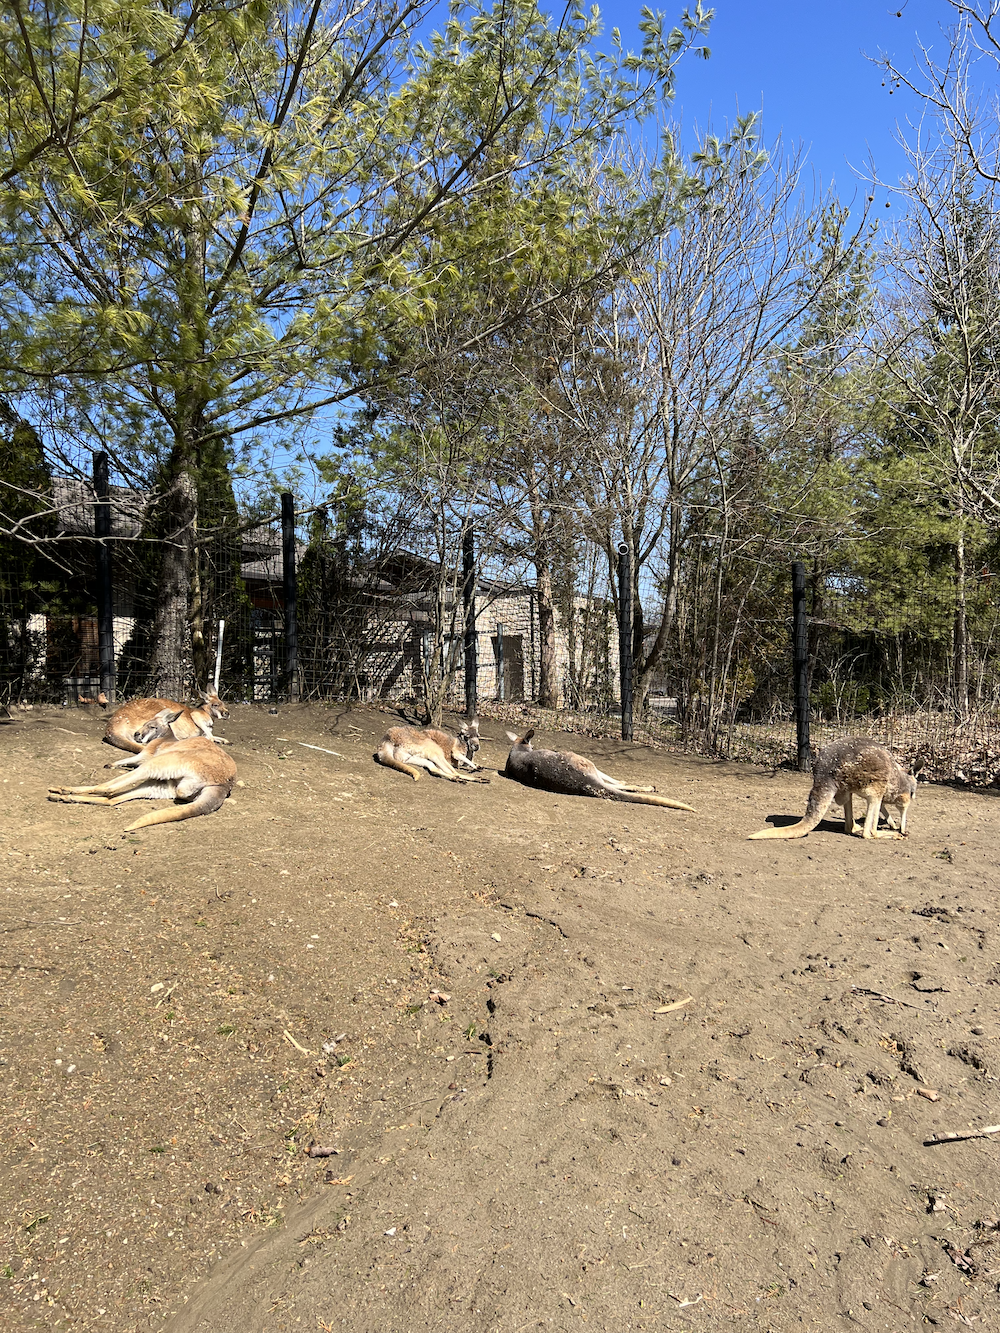 kangaroos at the zoo in columbus, ohio